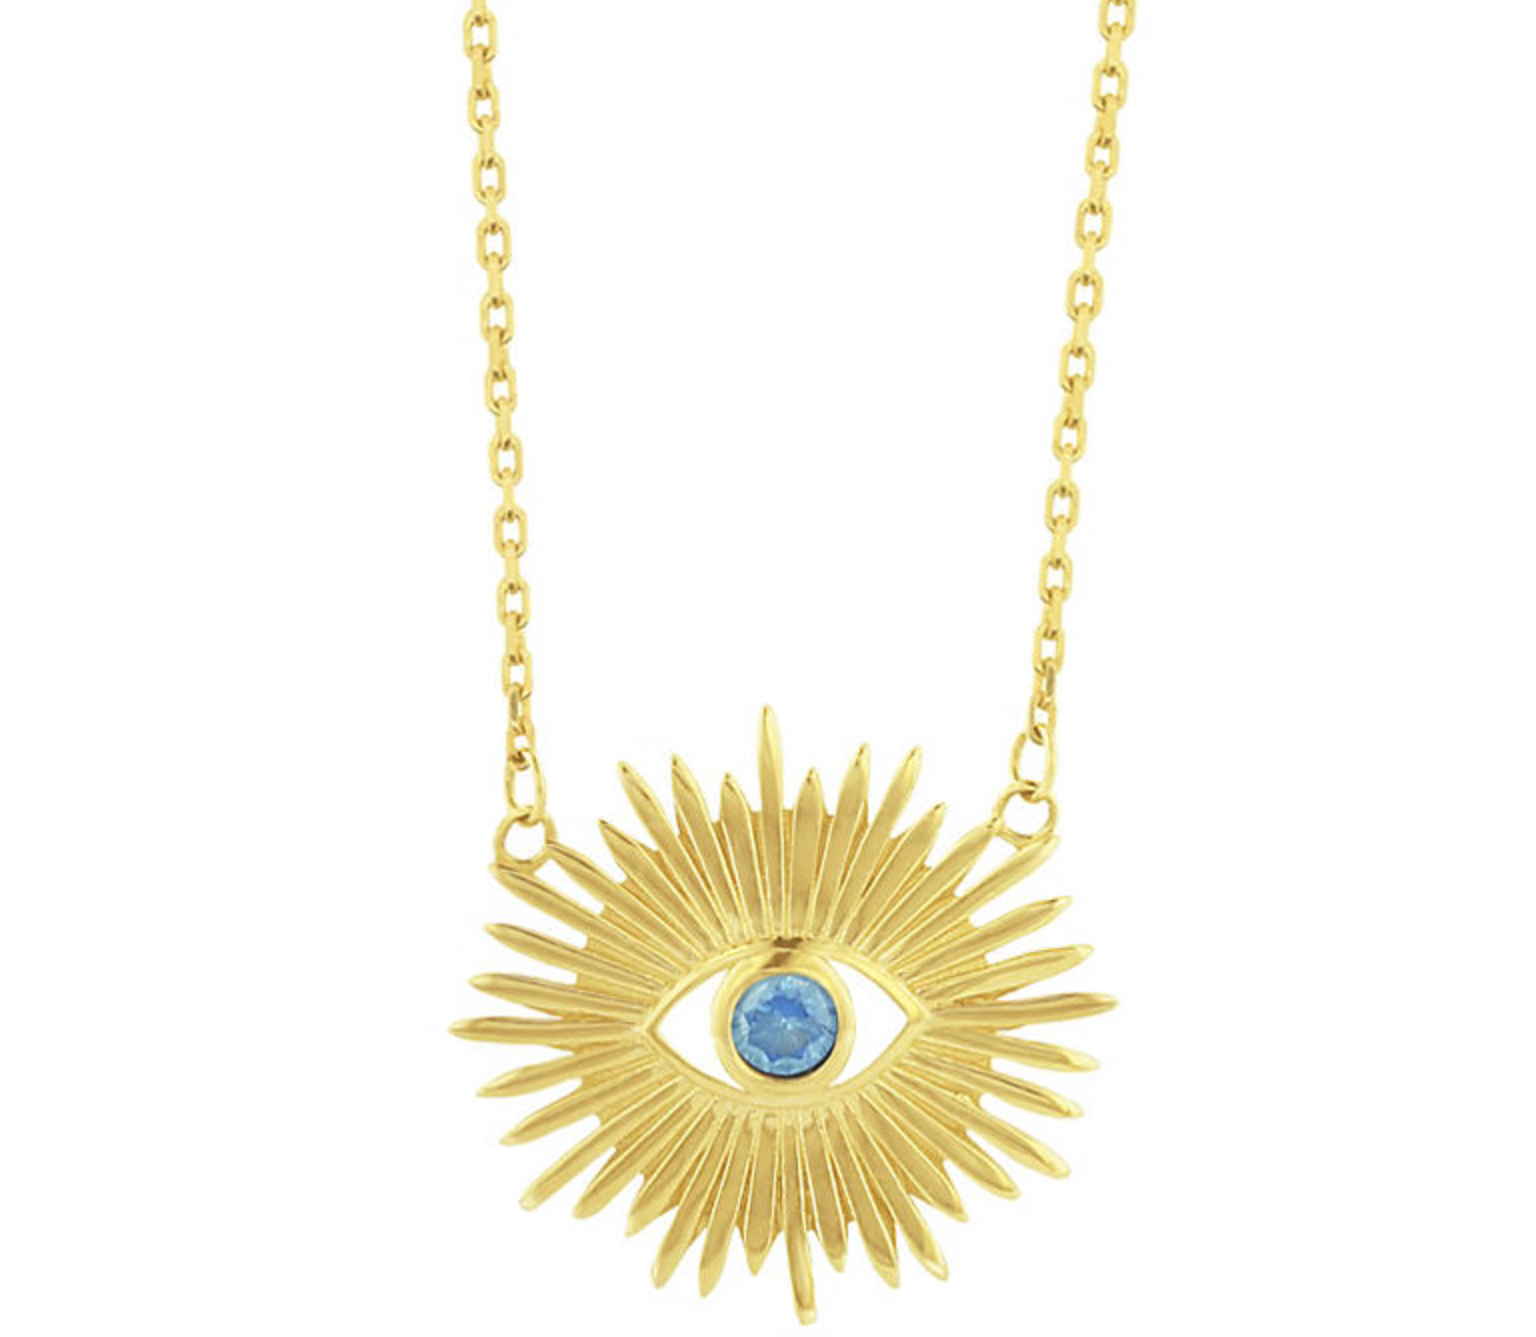 Sunburst necklace with swiss blue topaz evil eye in center